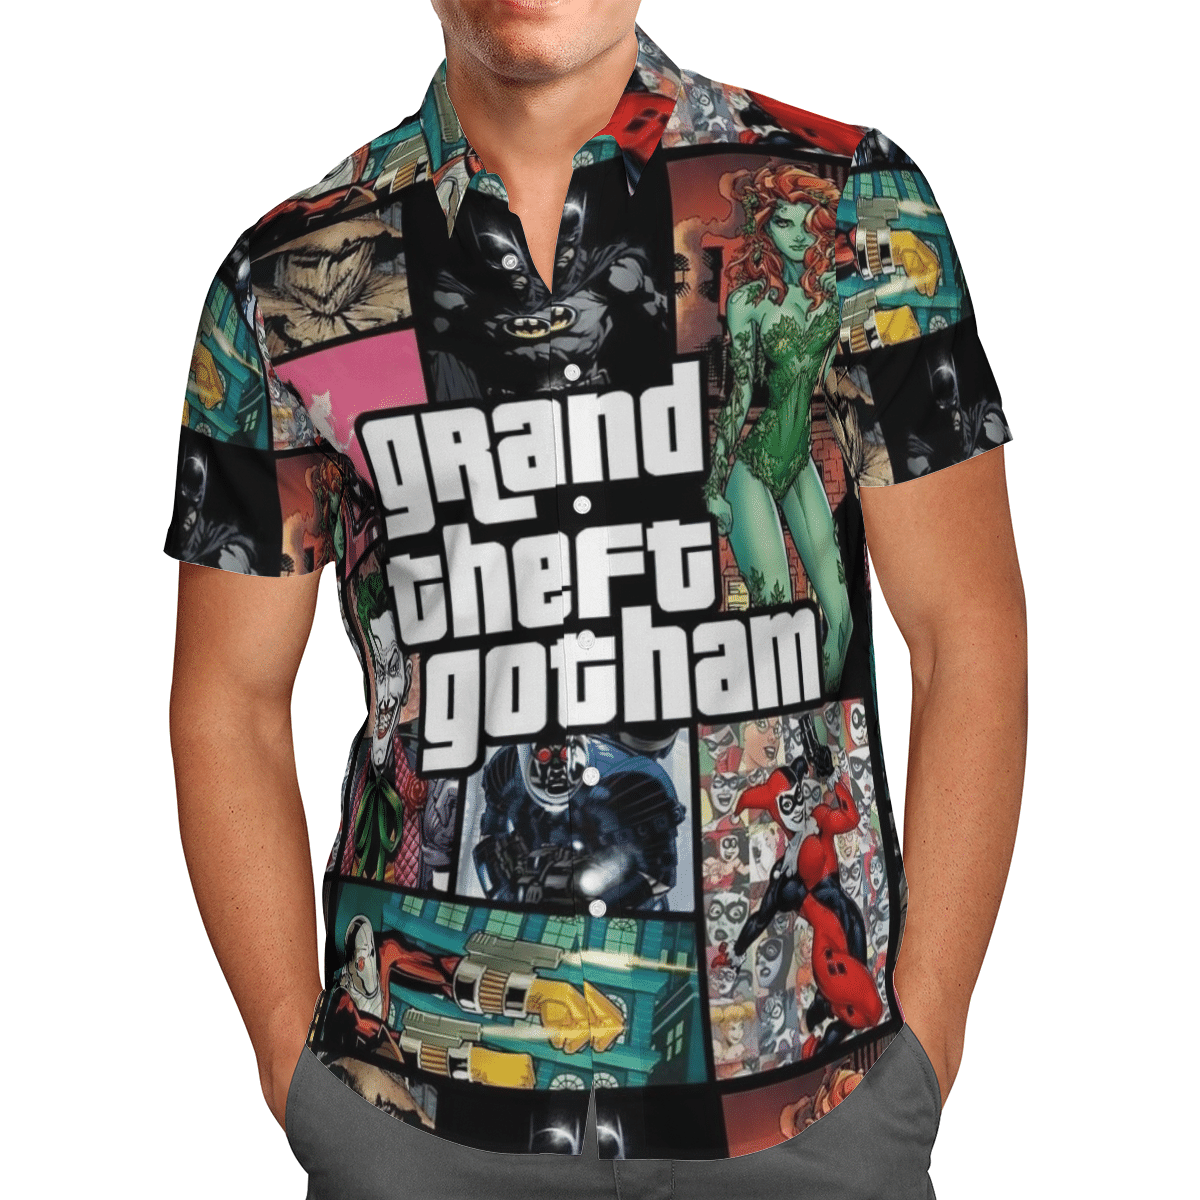 Grand Theft Gotham Hawaiian shirt 1